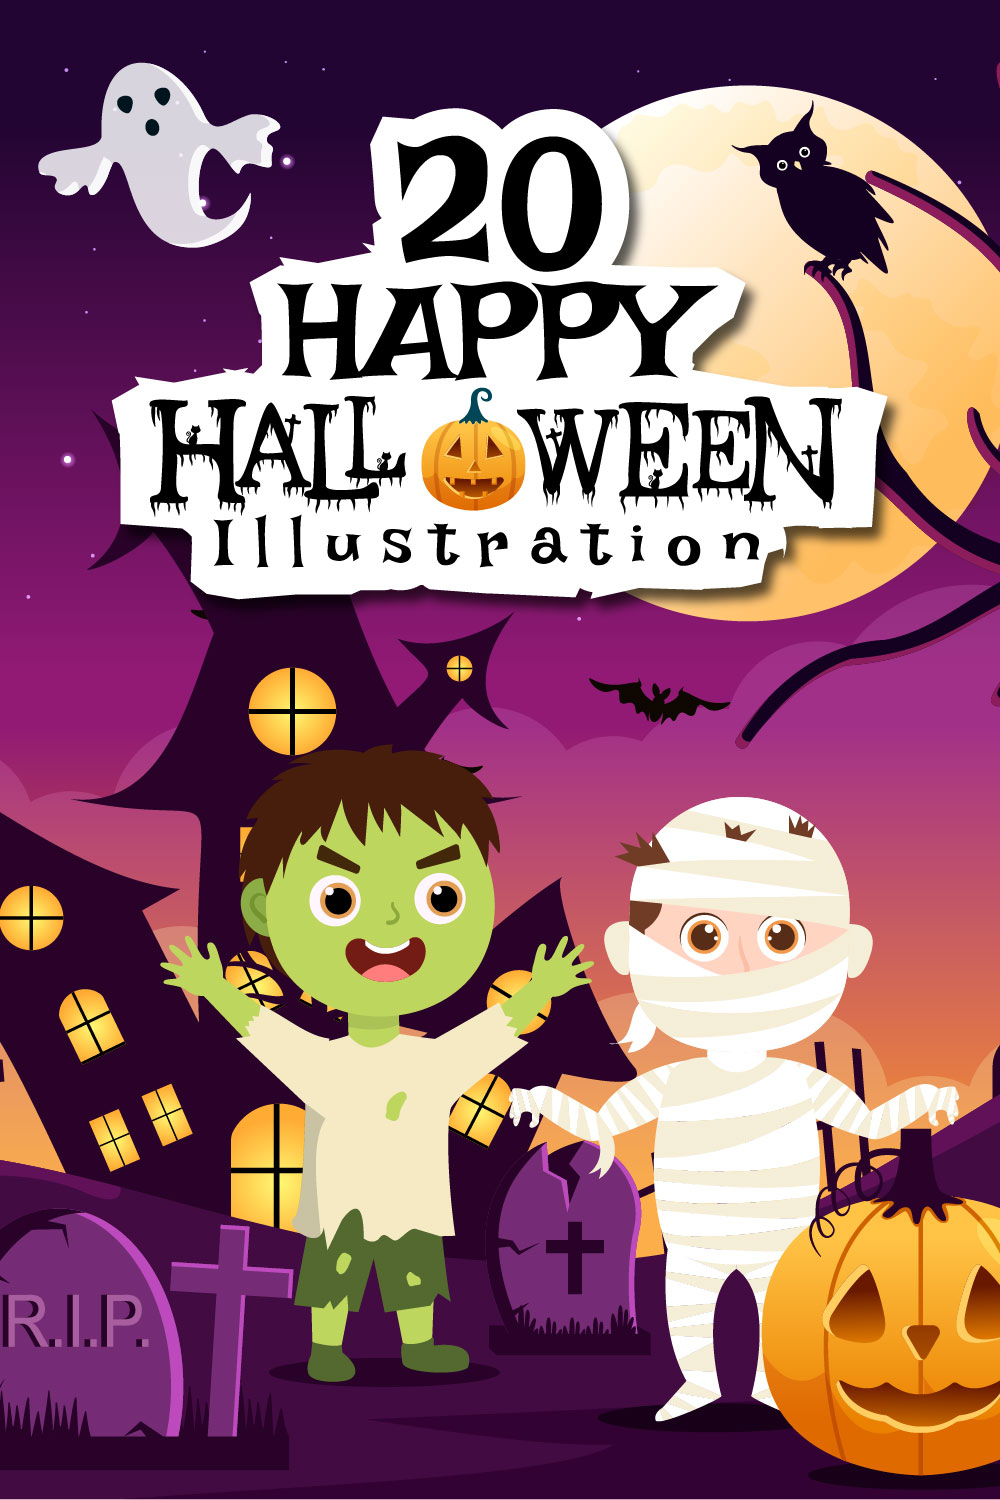 20 Happy Halloween Illustration Pinterest Image.